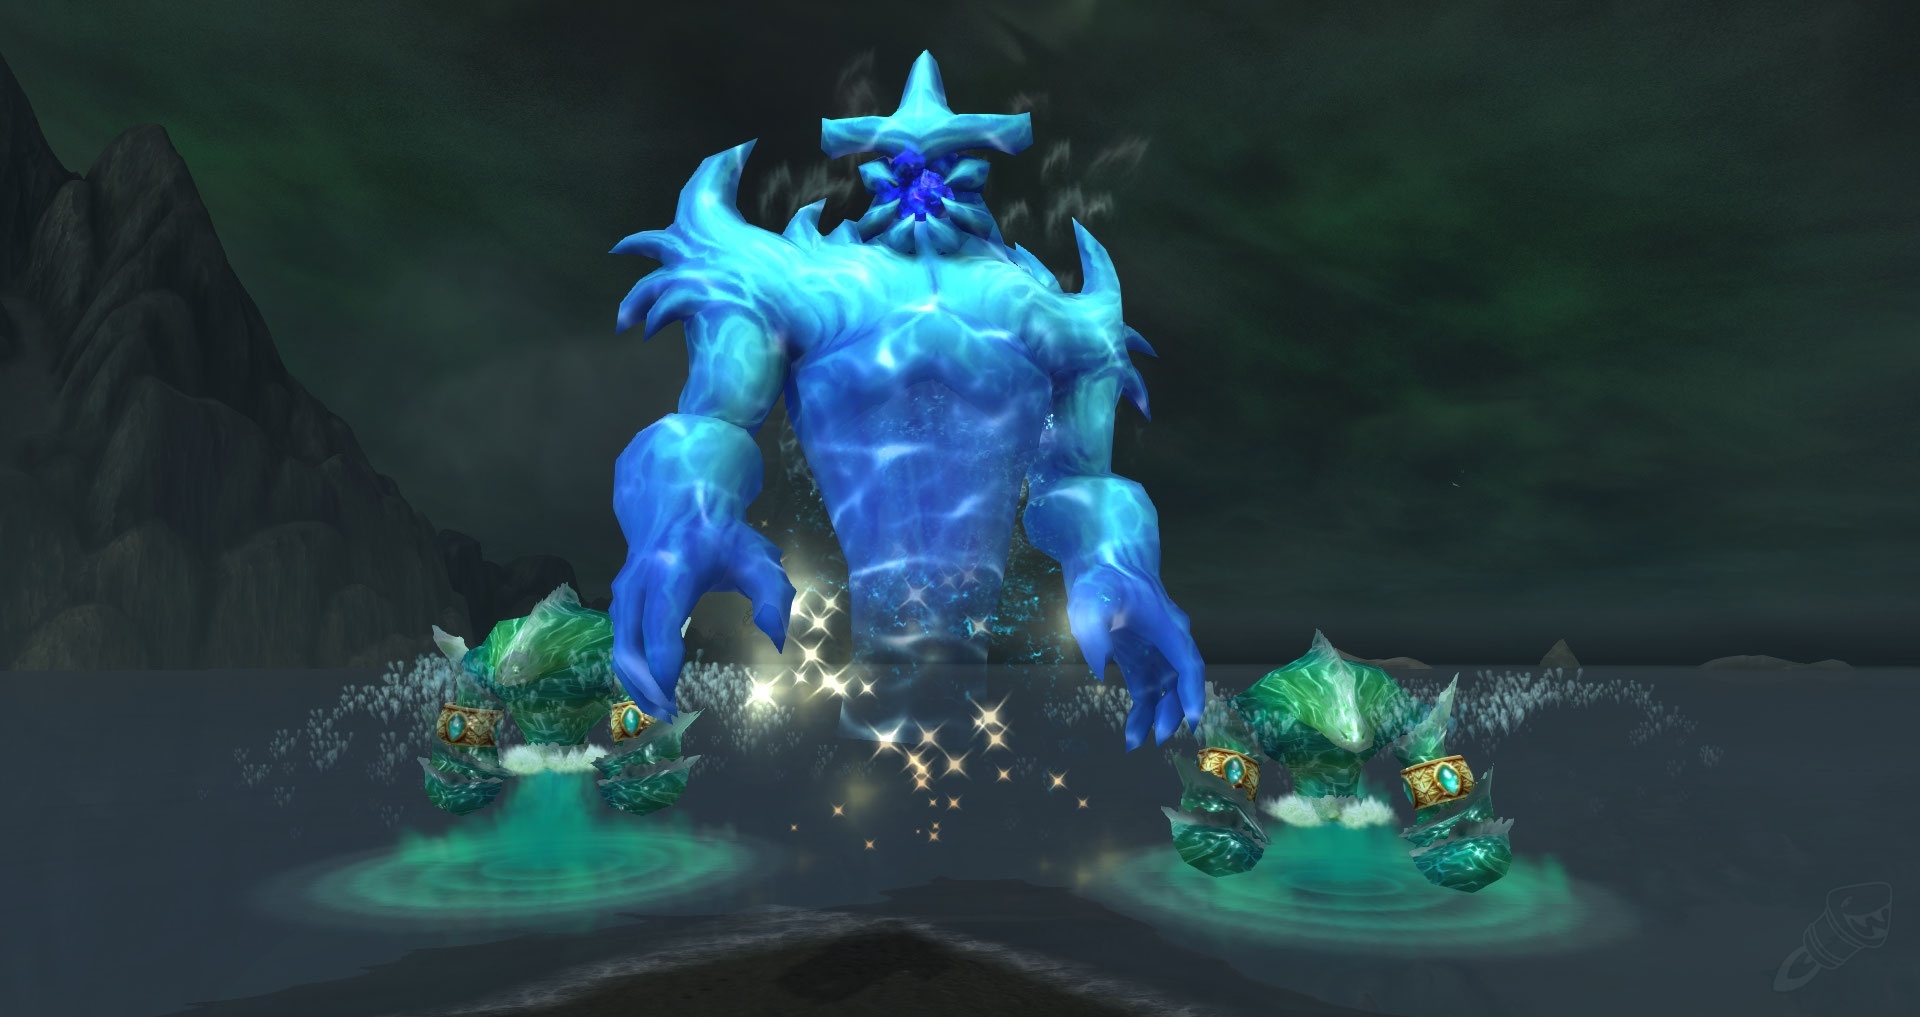 Small World of Warcraft - Playeasy